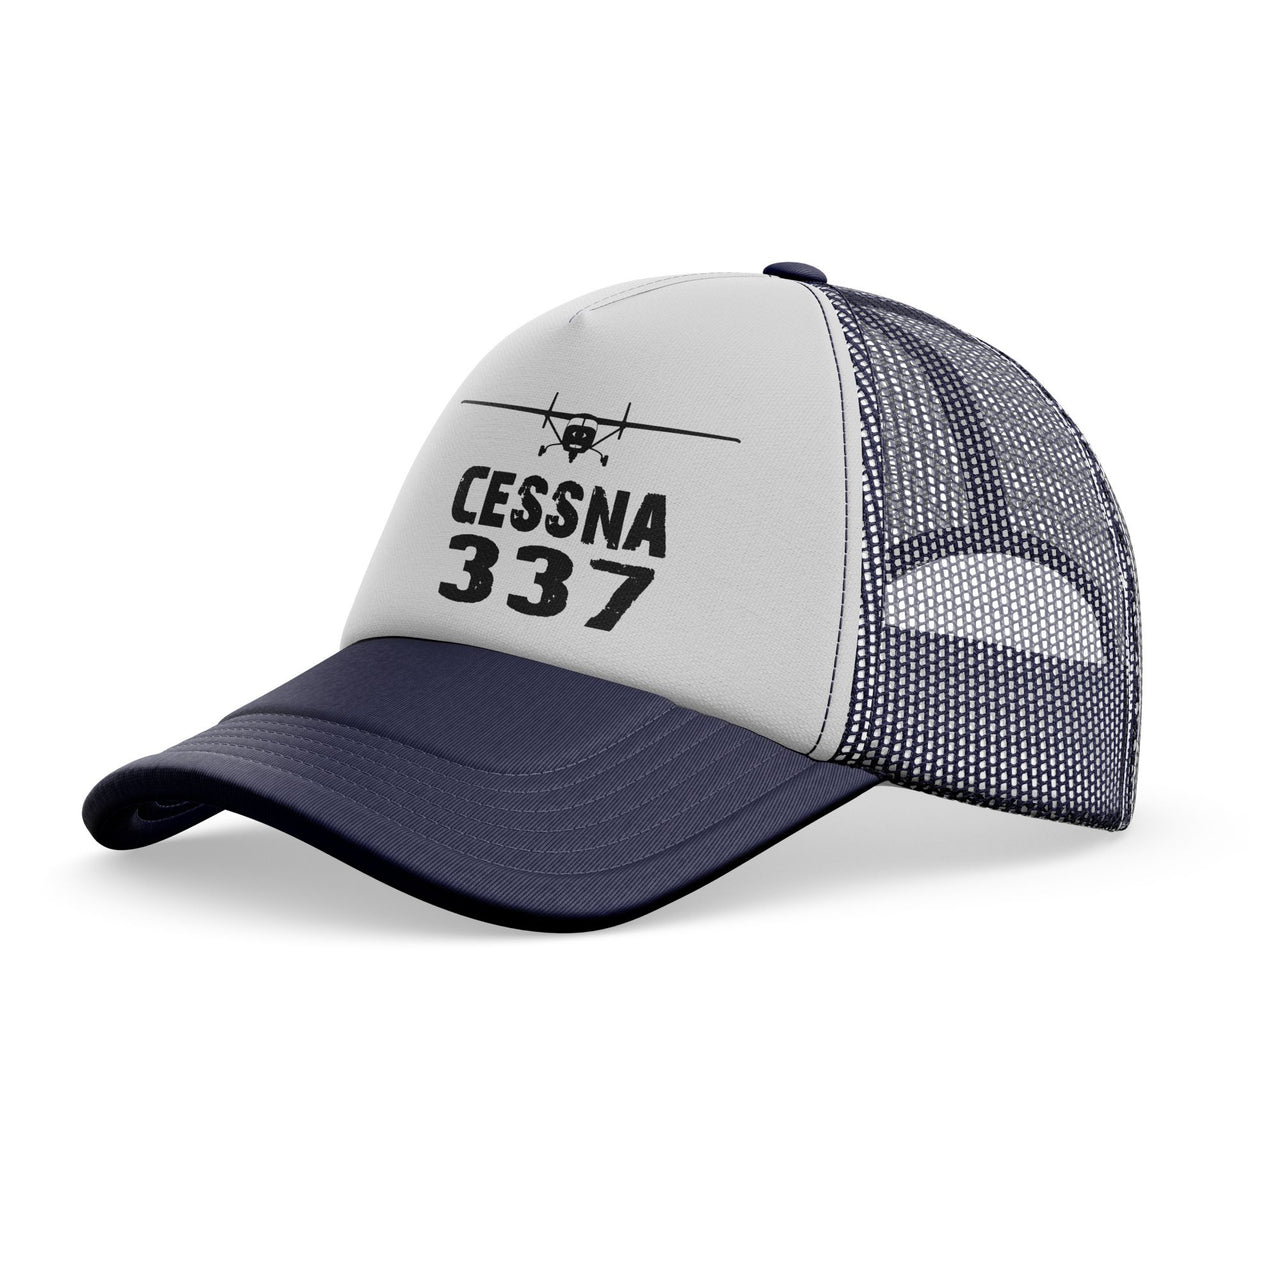 Cessna 337 & Plane Designed Trucker Caps & Hats